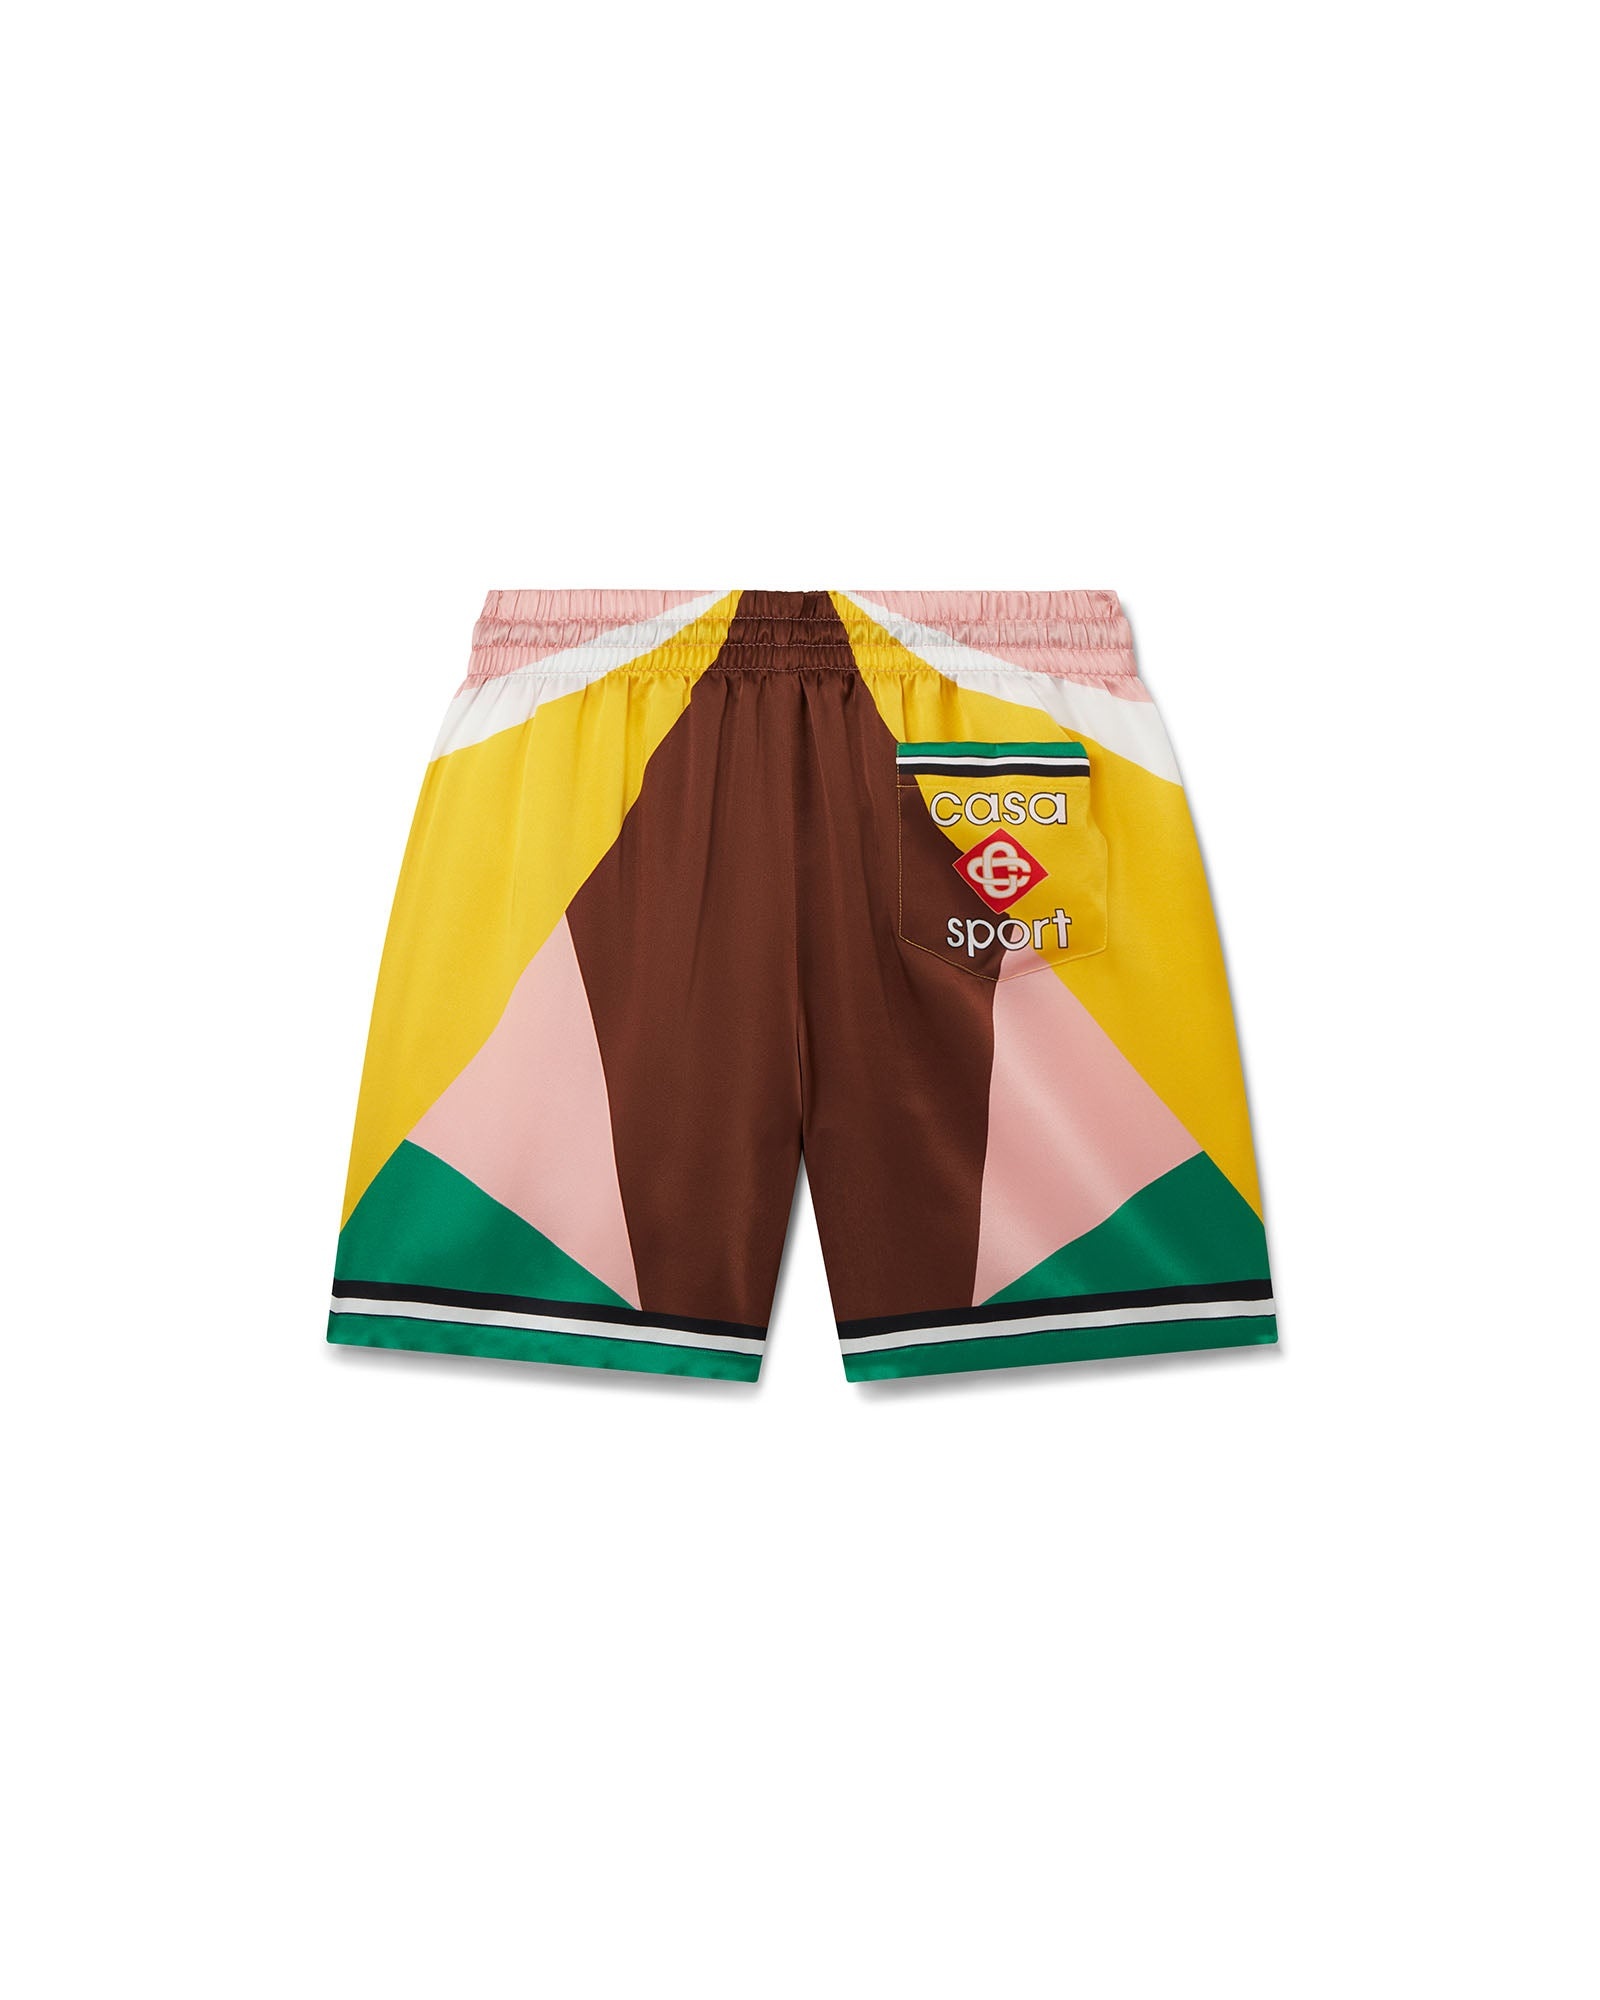 Casa Sport Silk Shorts - 2